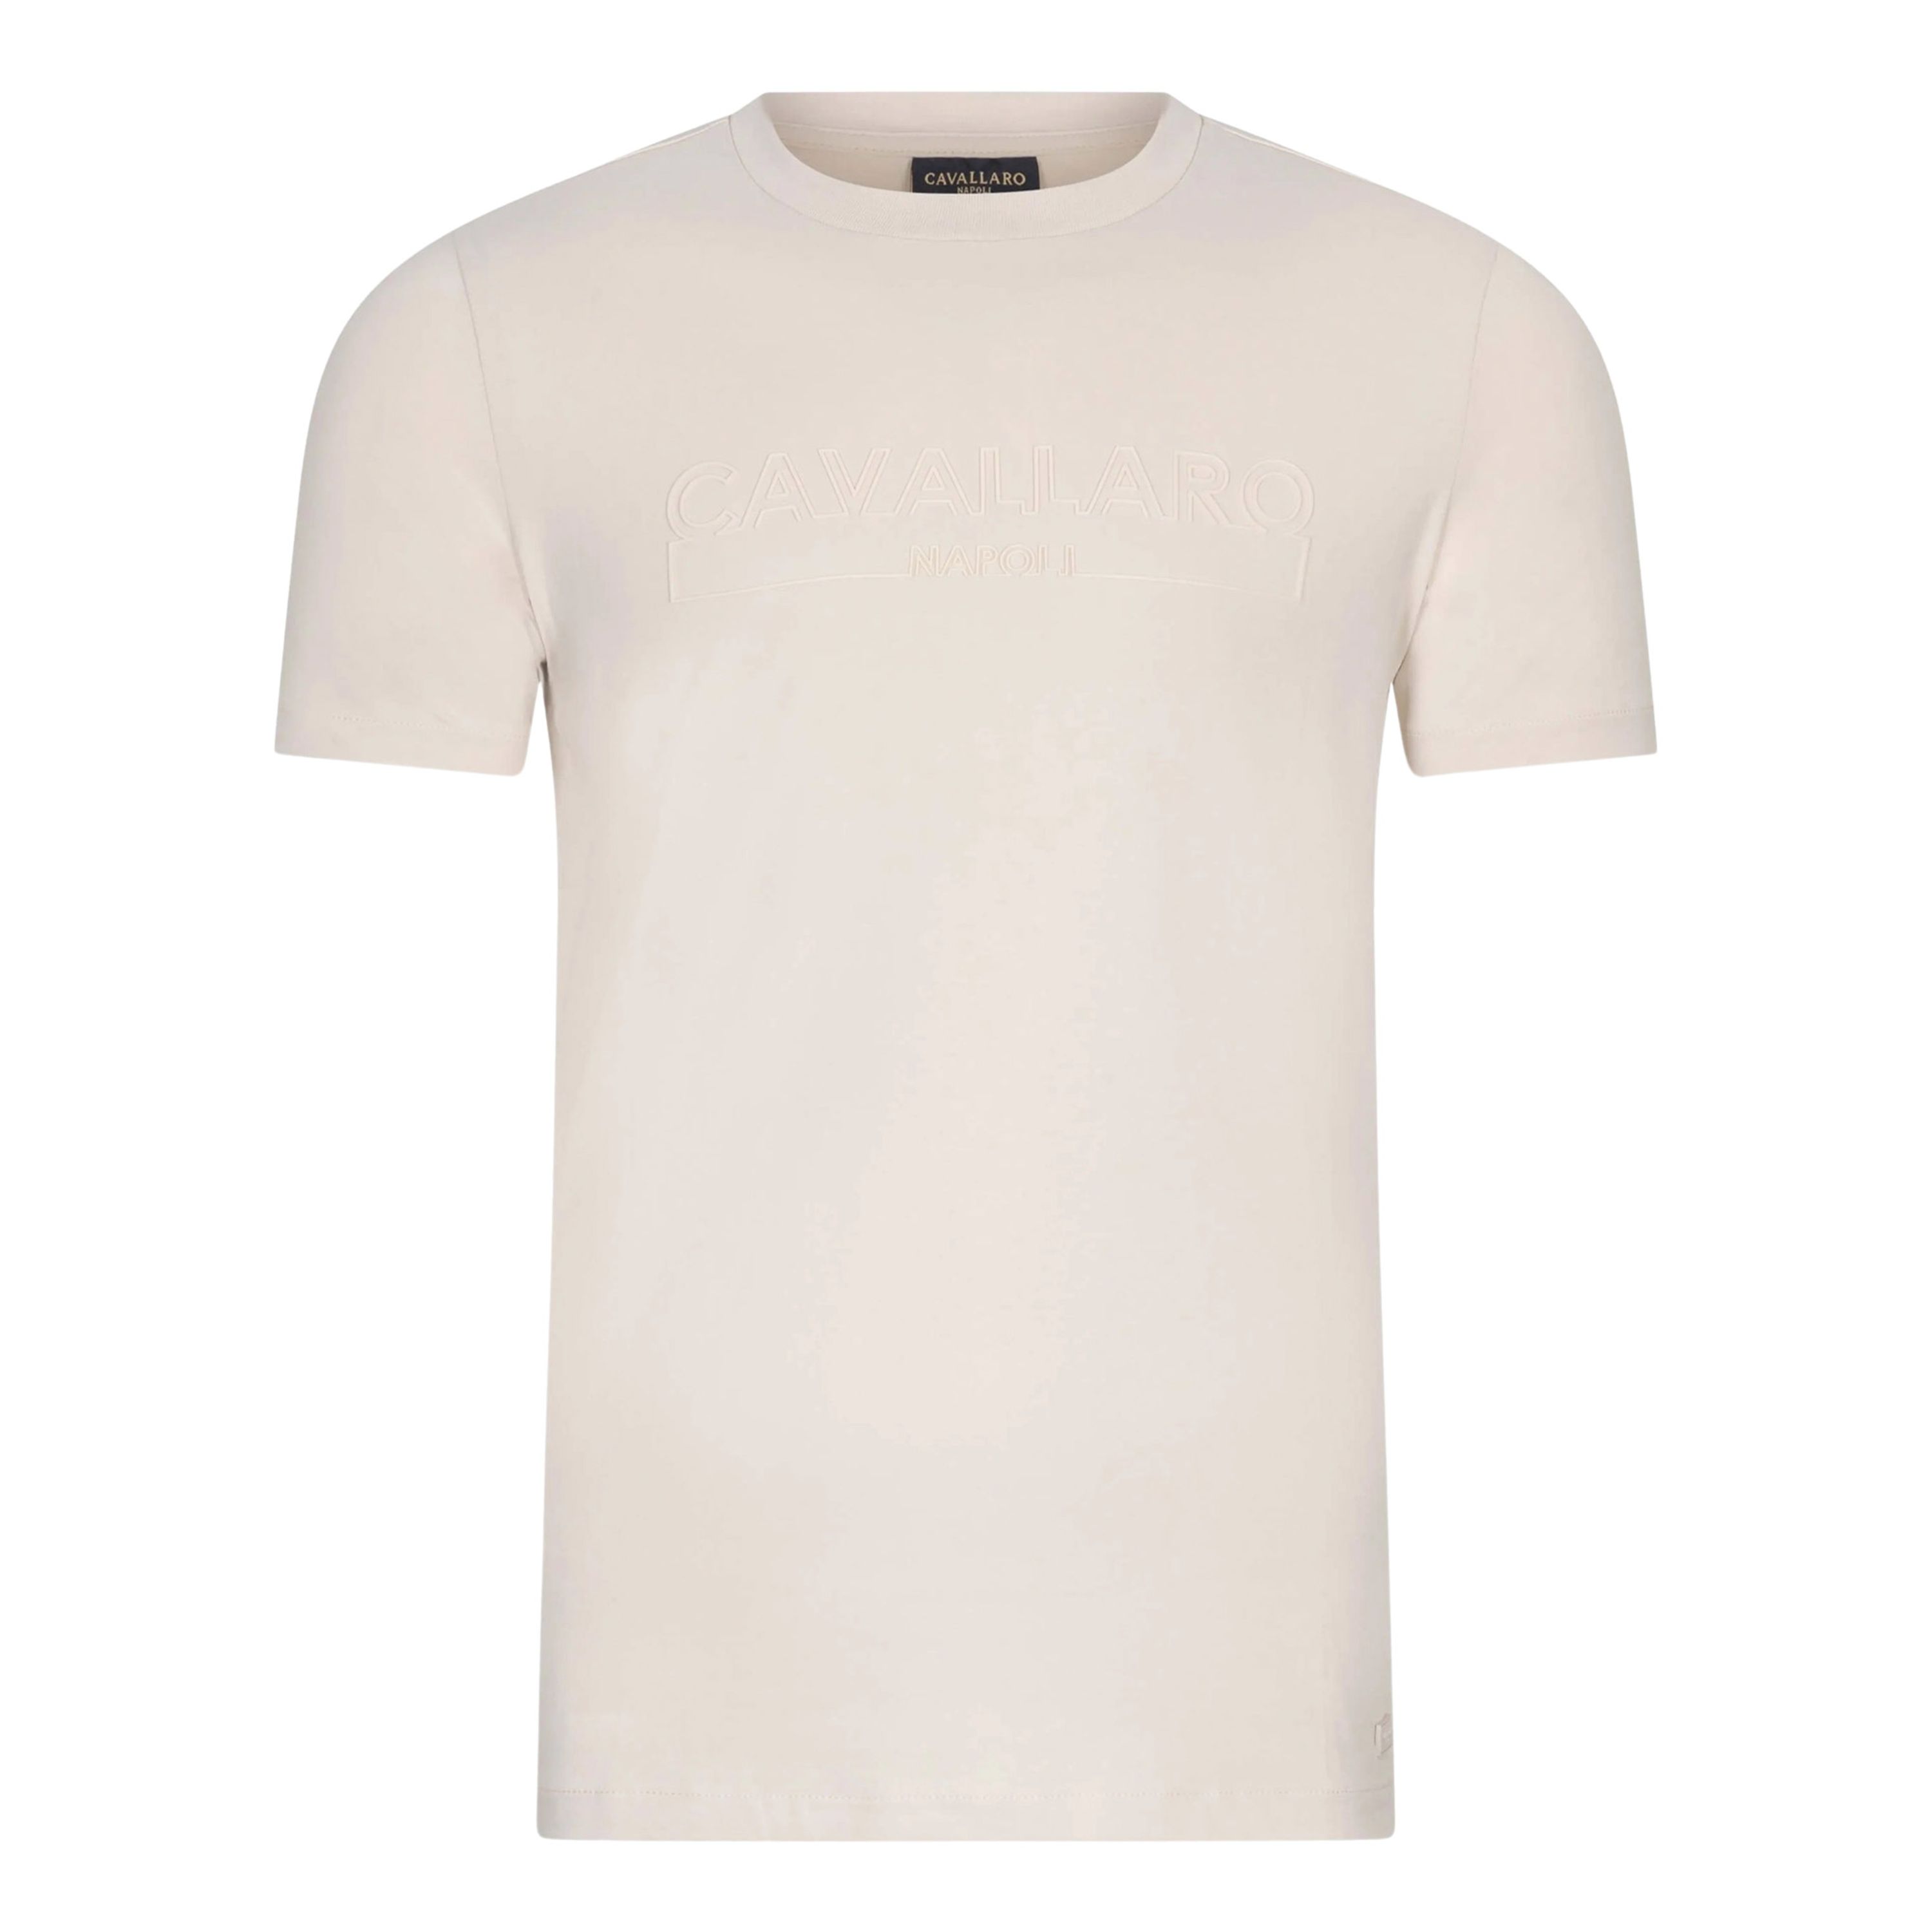 Cavallaro Napoli regular fit T-shirt Beciano met printopdruk kit